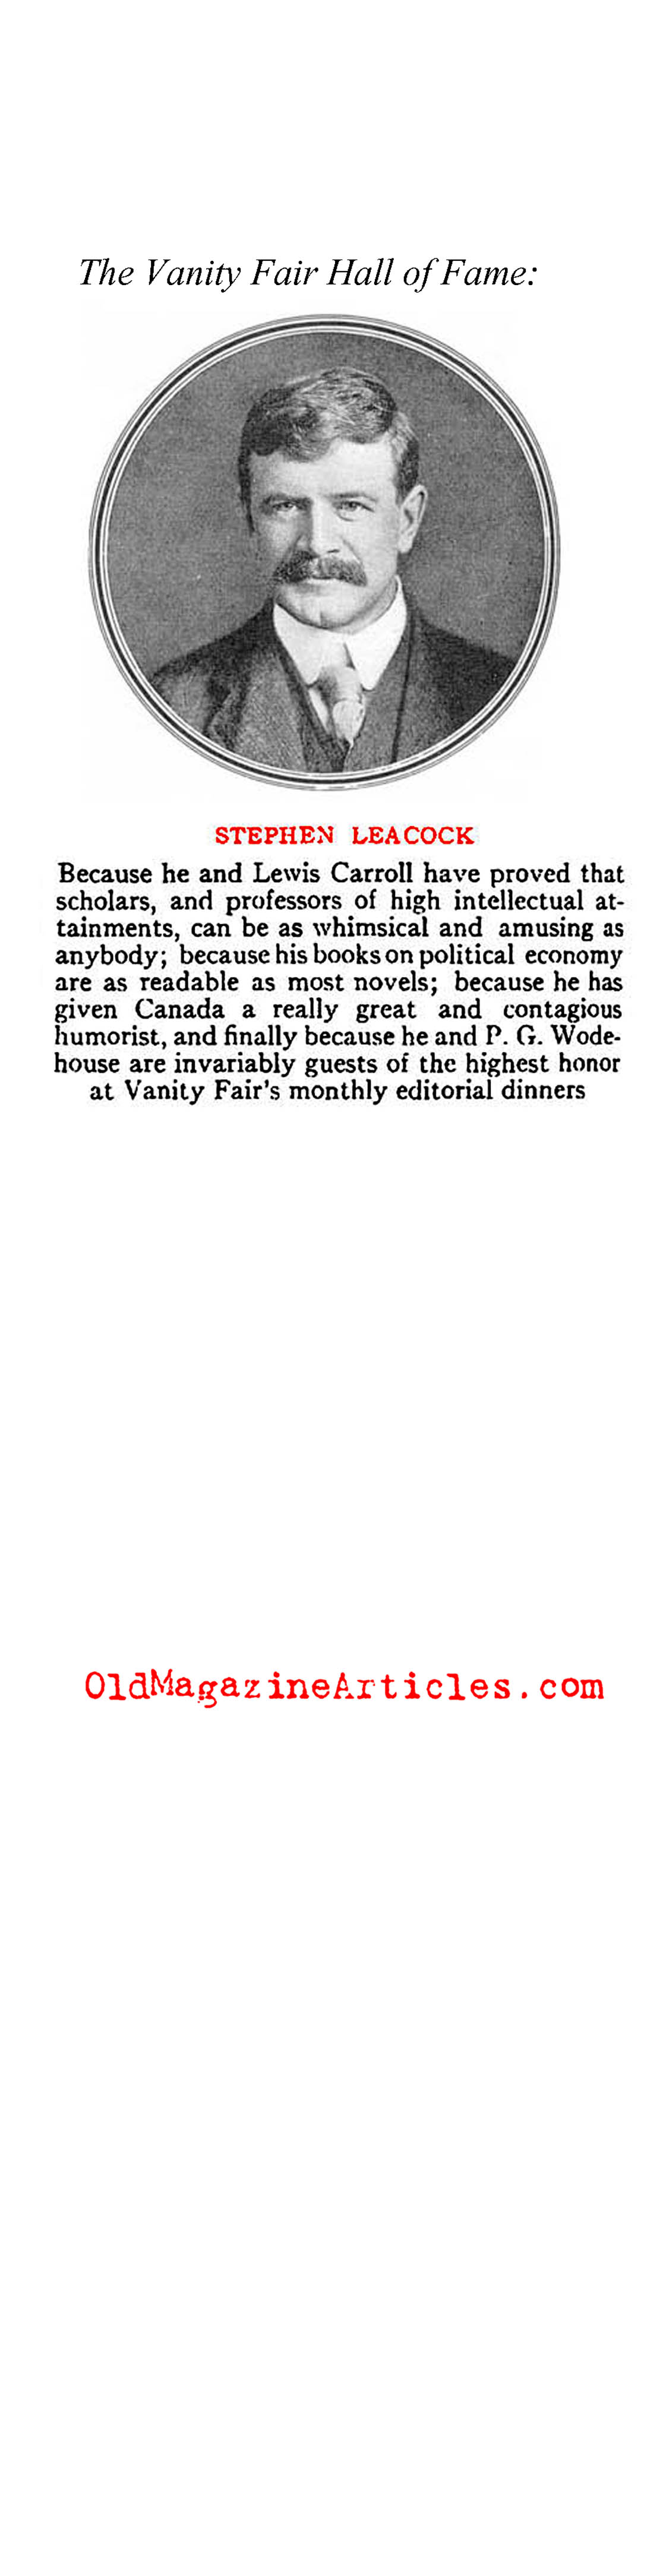 The Fine Art of Introduction  (Vanity Fair, 1917)